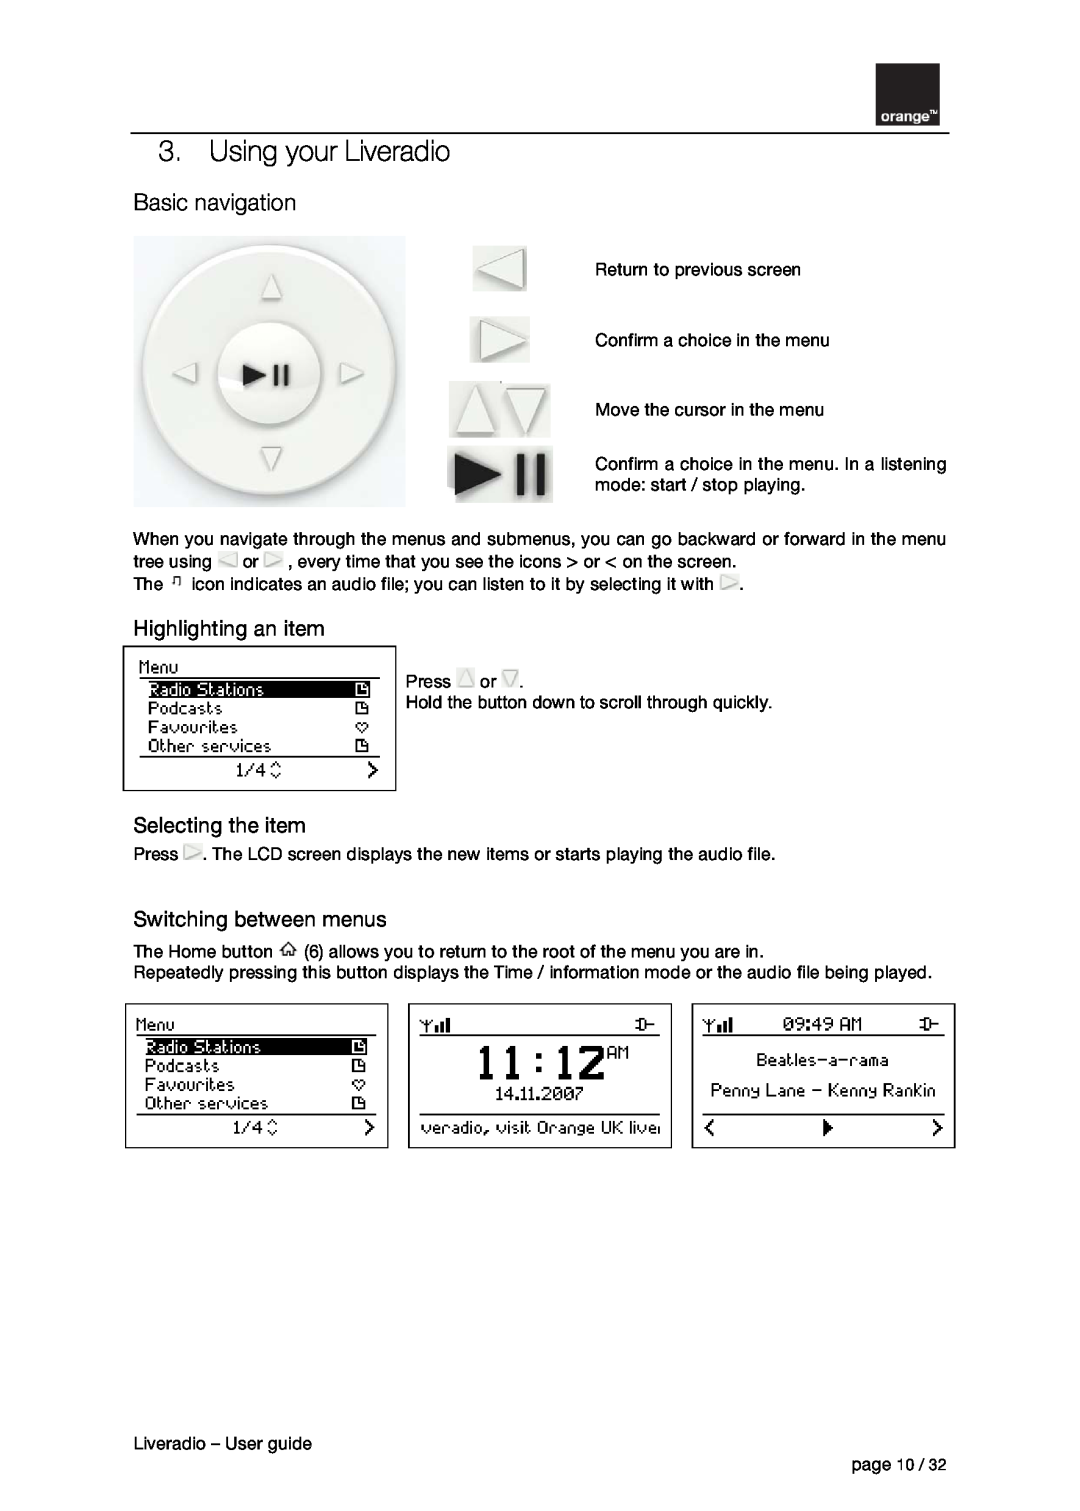 Orange Micro B31100004-B manual Using your Liveradio, Basic navigation, Highlighting an item, Selecting the item 